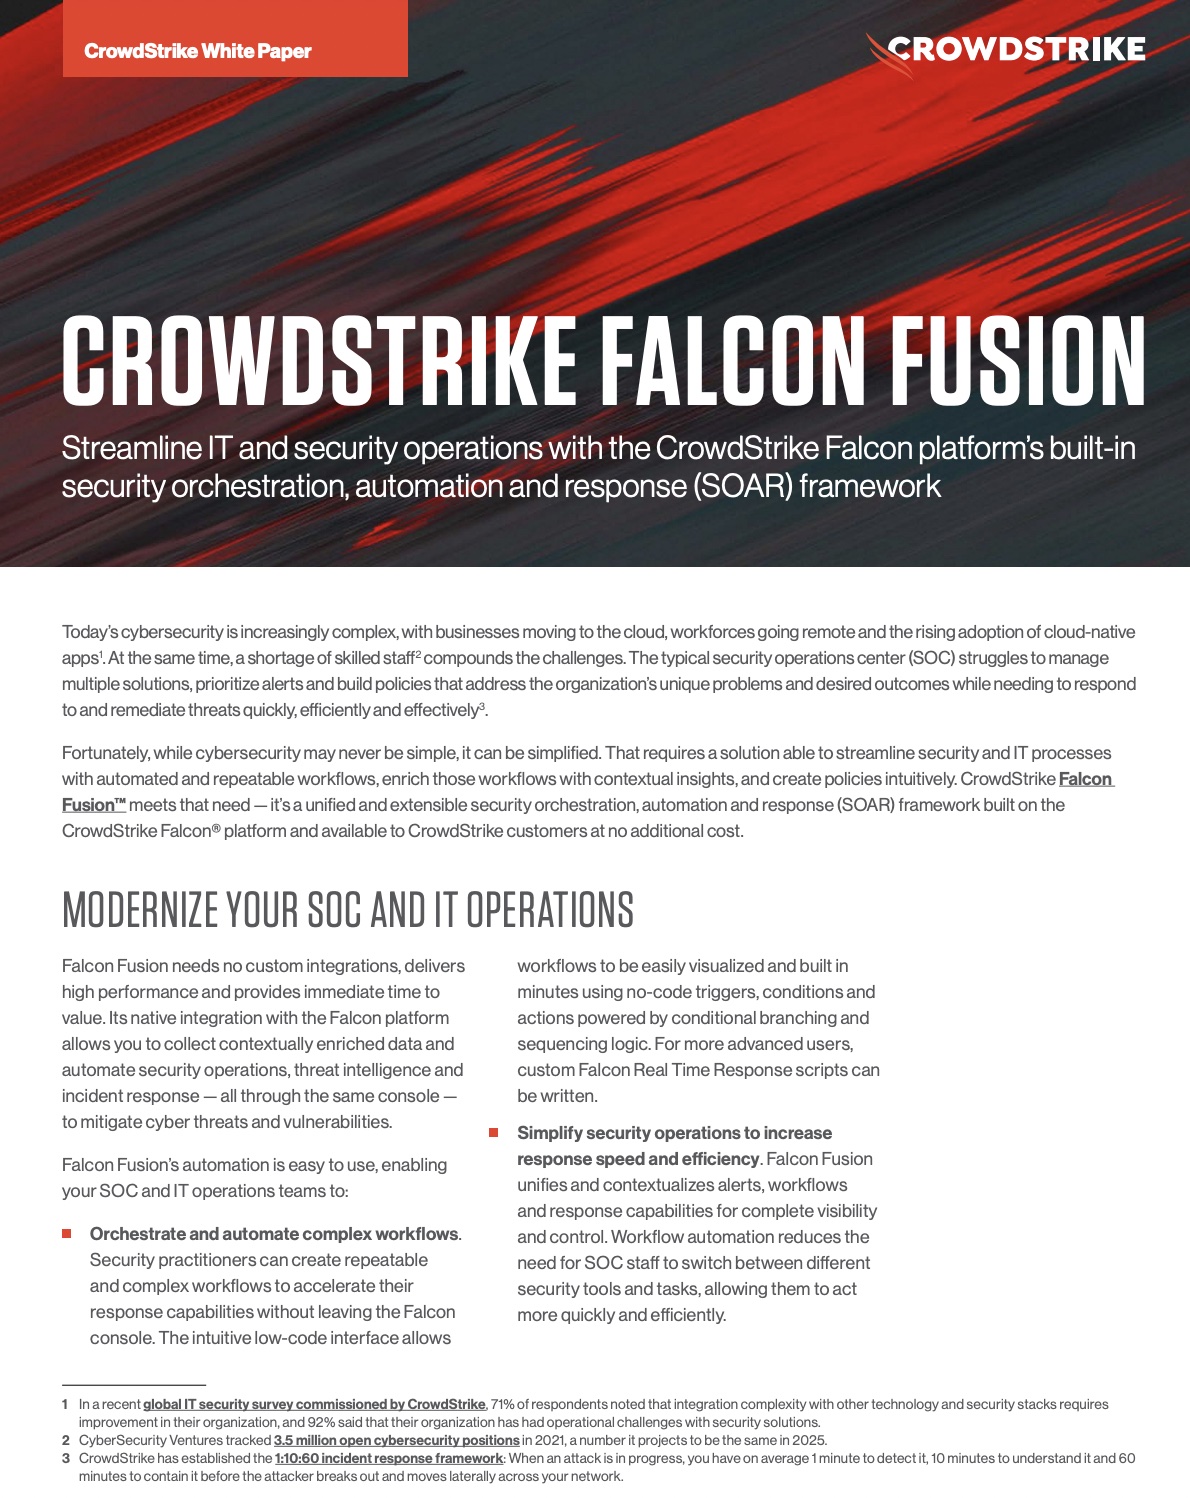 crowdstrike falcon flight control